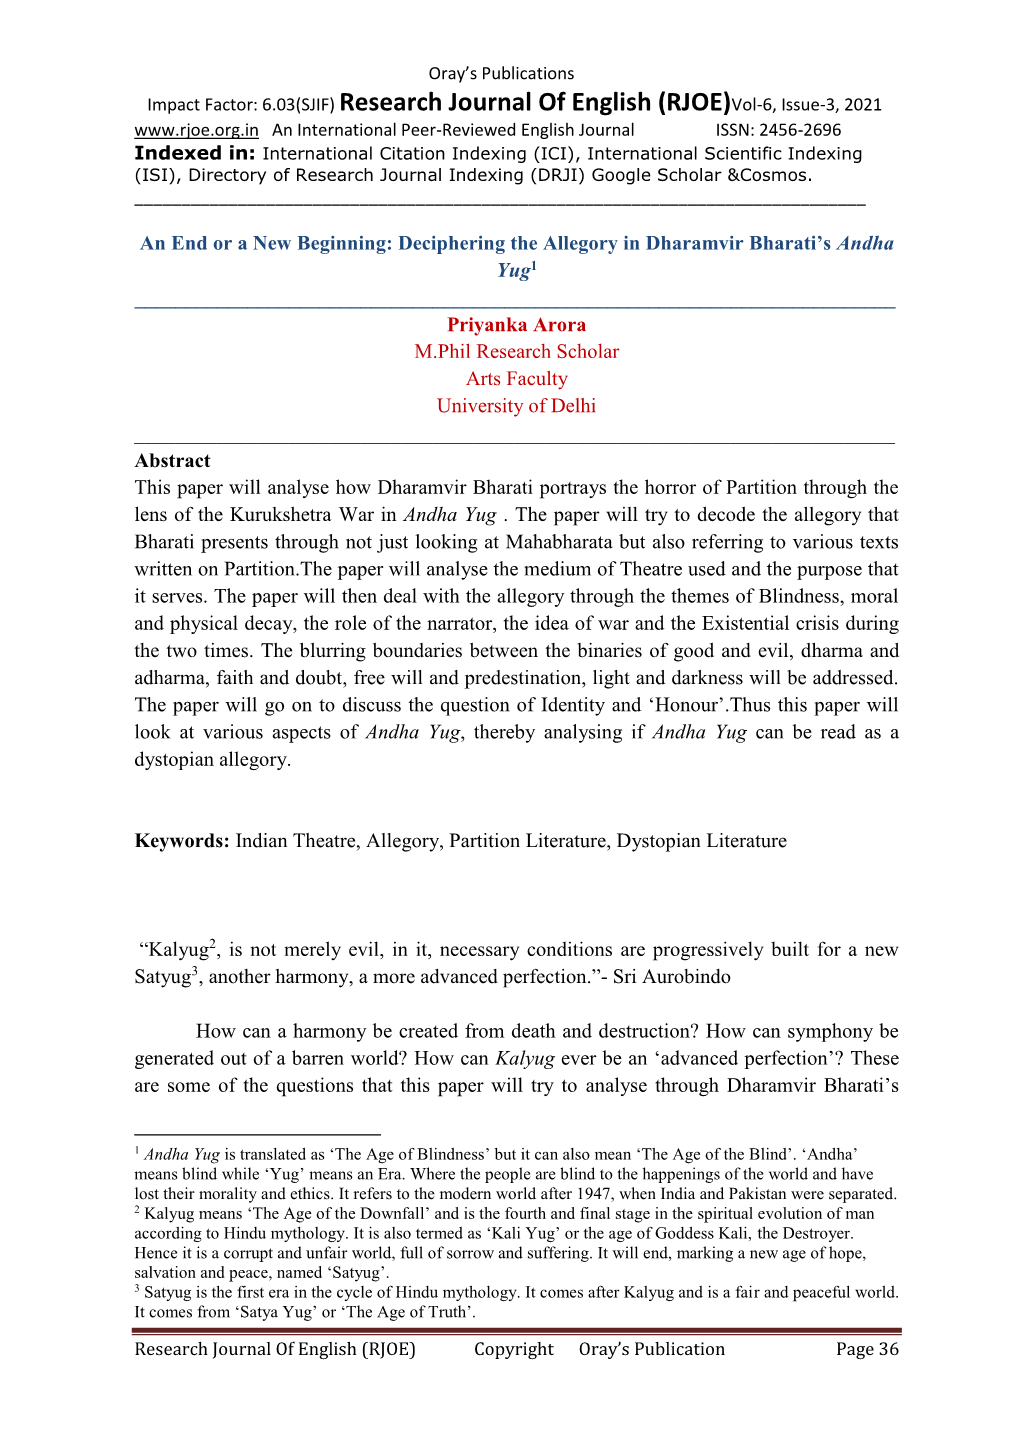 6.03(SJIF) Research Journal of English (RJOE)Vol-6, Issue-3, 2021